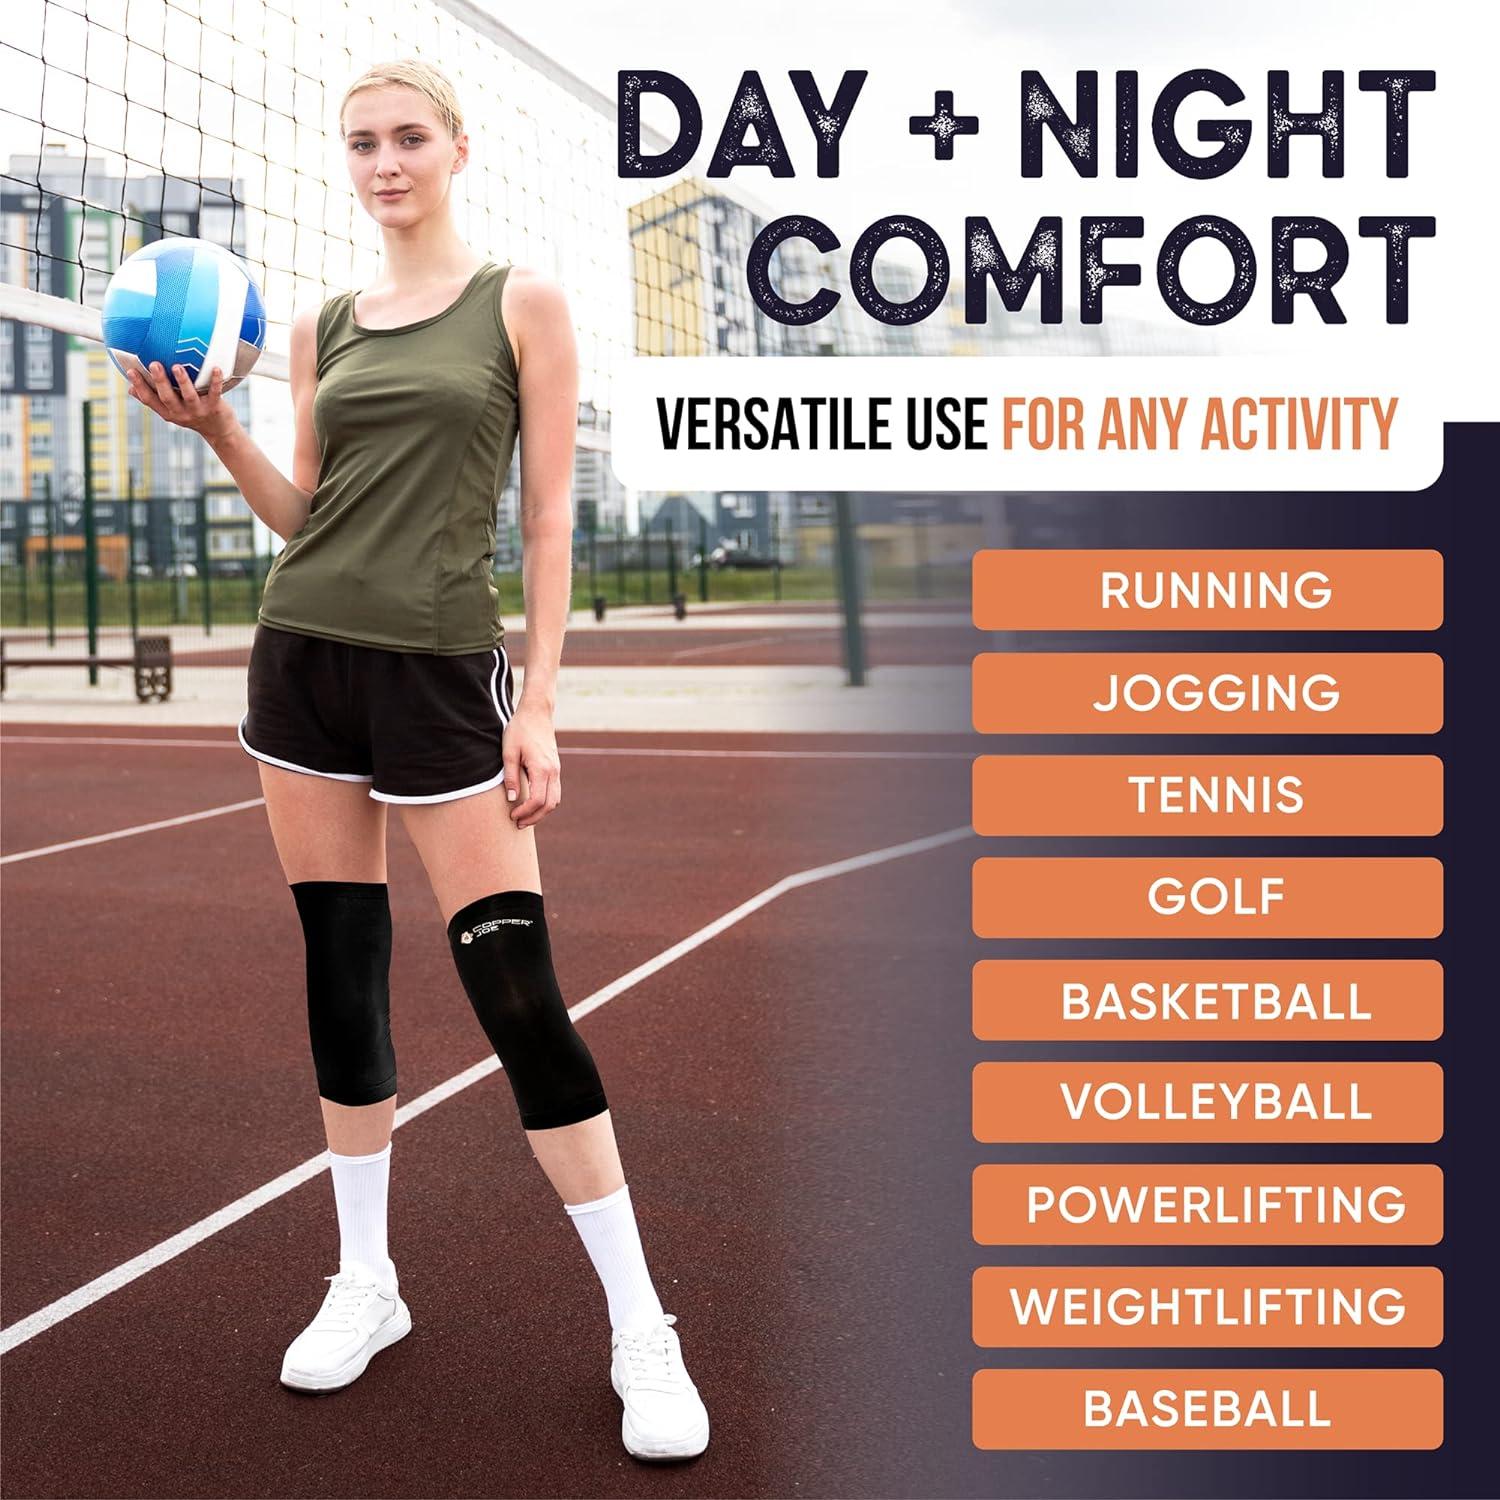 Copper Joe Full Leg Compression Sleeve - Support for Knee, Thigh, Calf,  Arthritis, Running and Basketball. For Men & Women : : Sports 